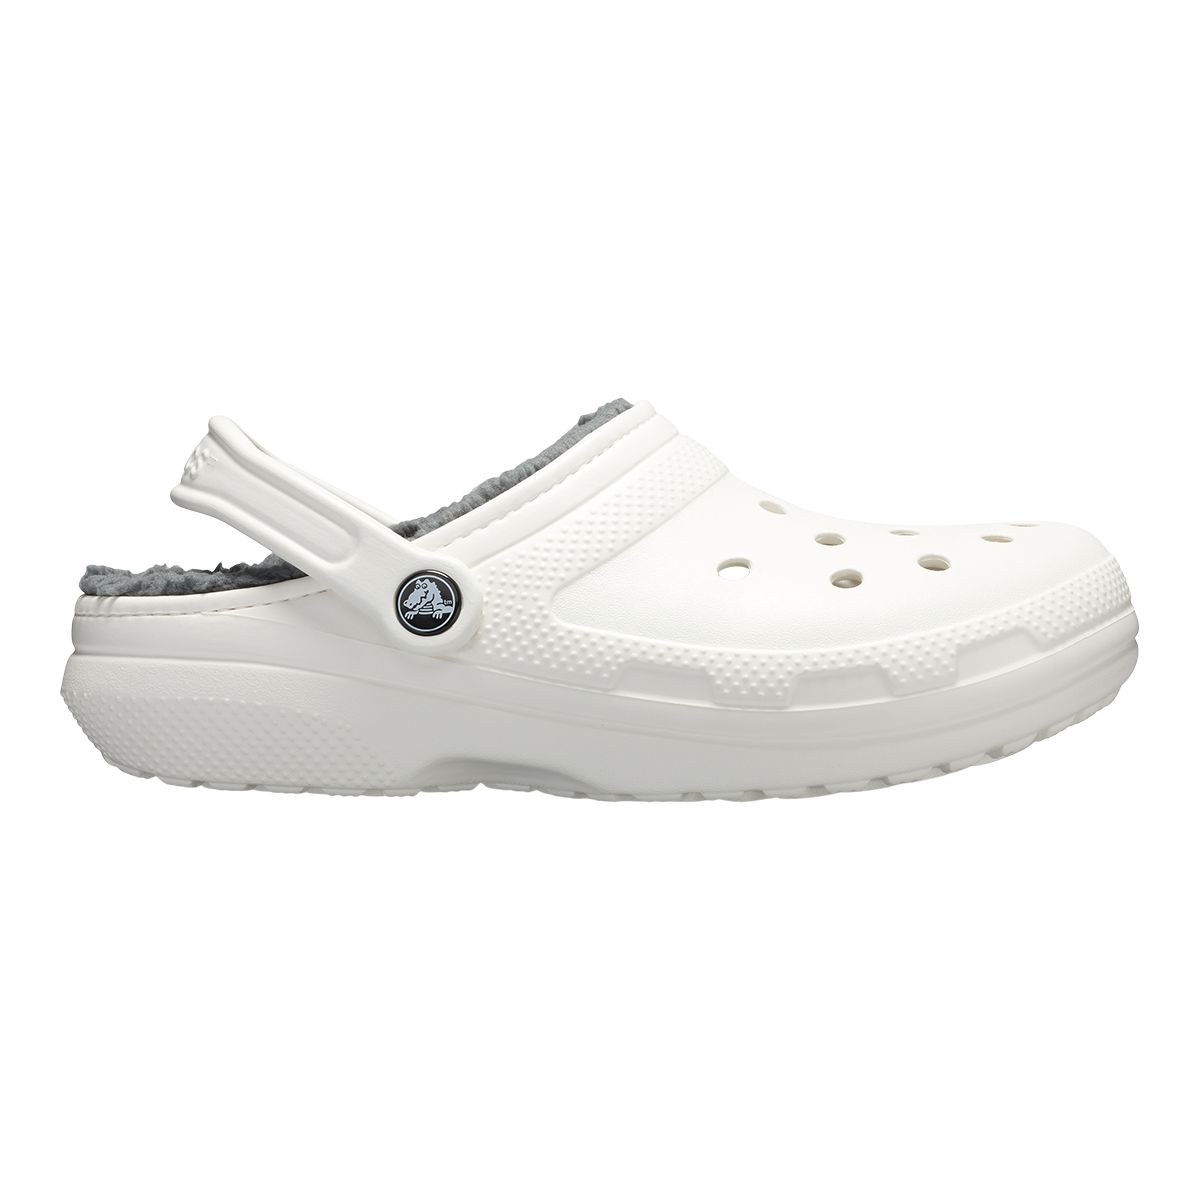 Crocs Women's Classic Lined Clog Sandals